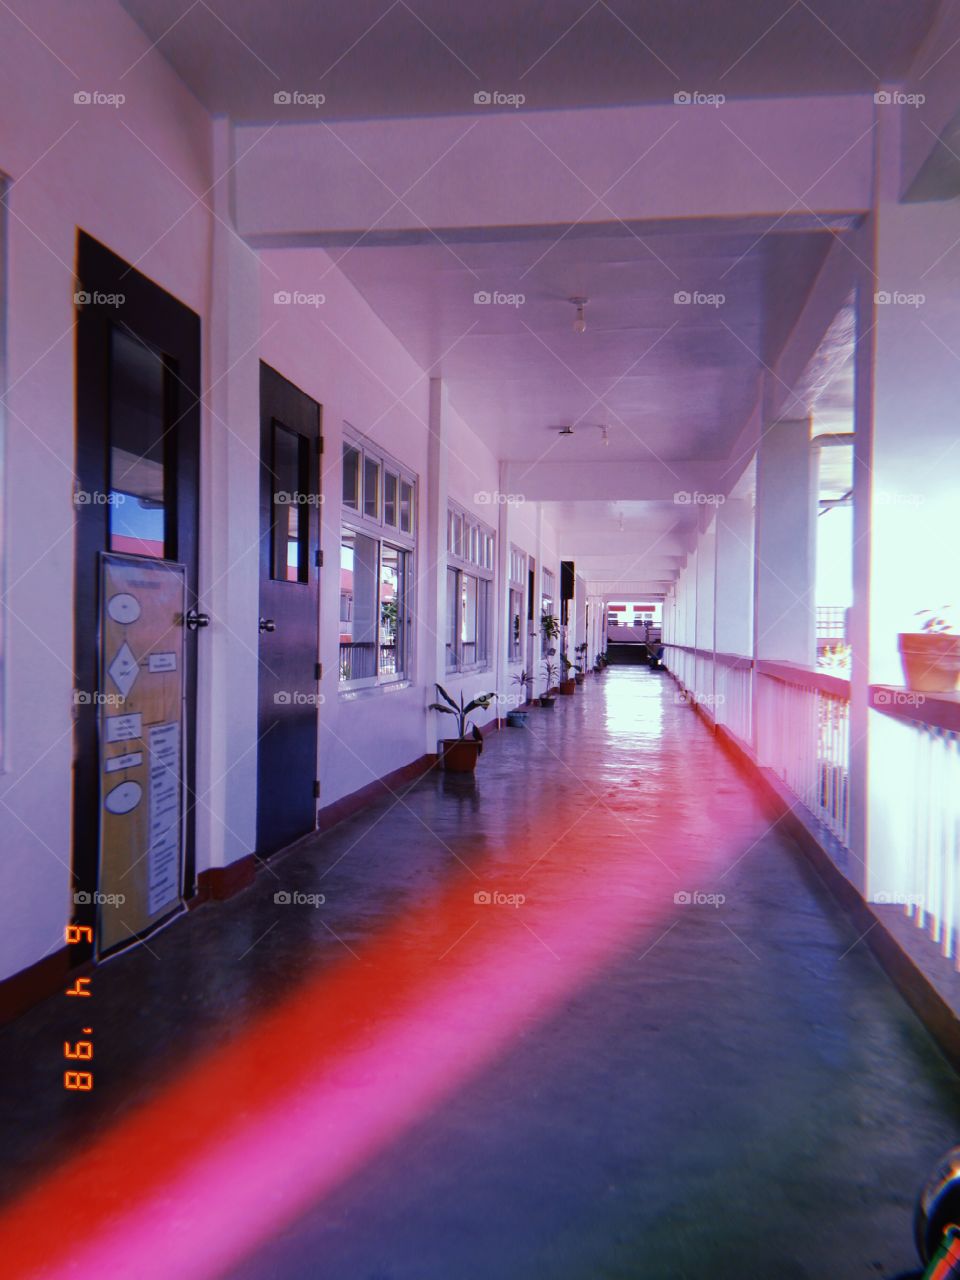 empty hallways always make me feel like I'm in a movie scene; a ghost waiting for yearssss lol